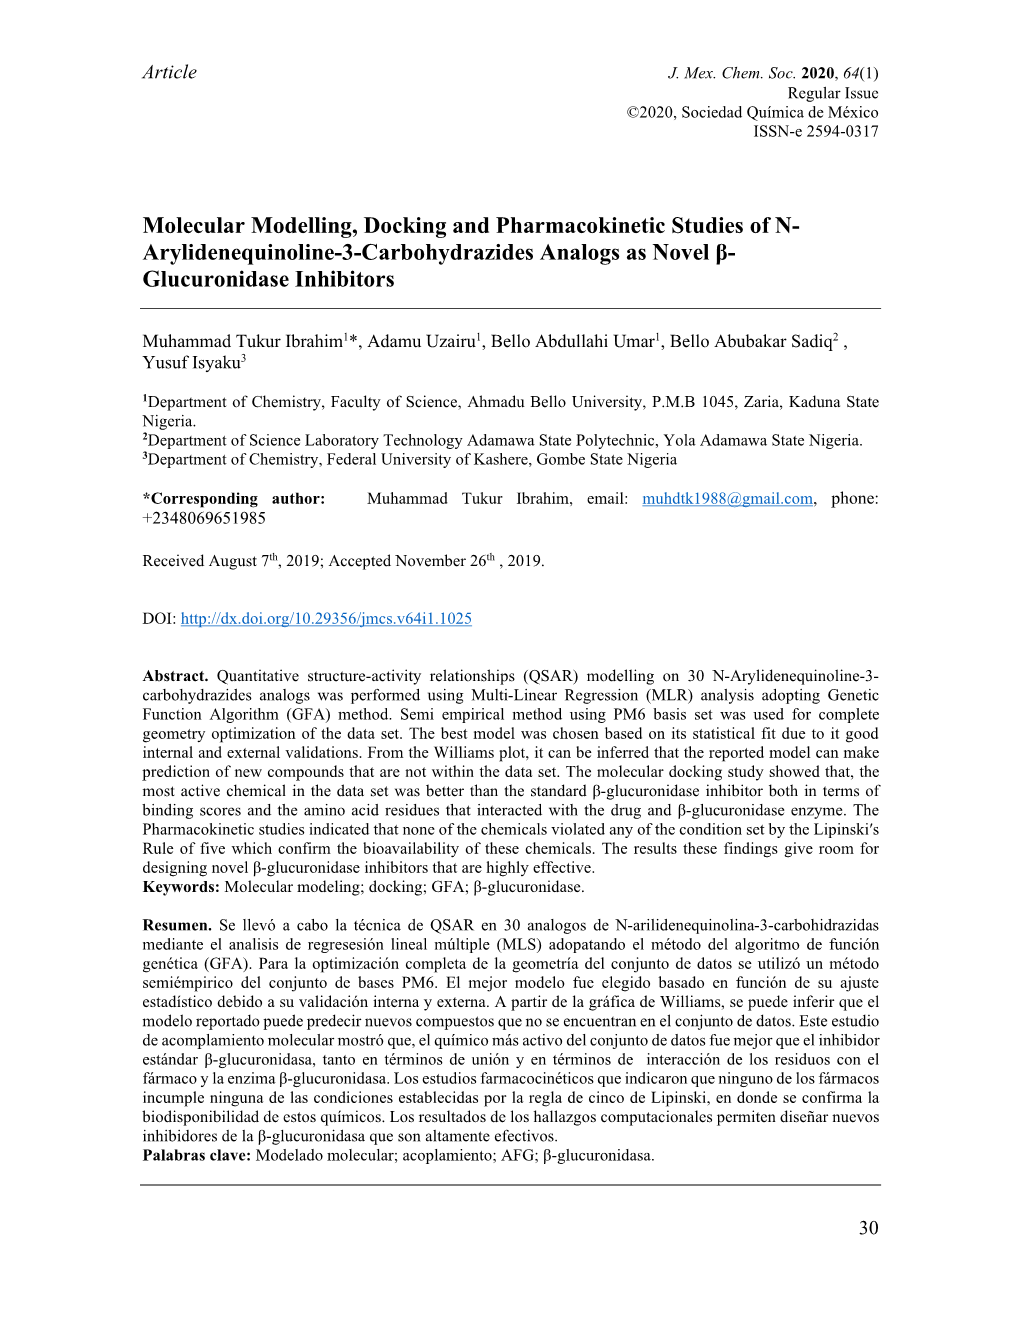 Molecular Modelling, Docking and Pharmacokinetic Studies of N- Arylidenequinoline-3-Carbohydrazides Analogs As Novel Β- Glucuronidase Inhibitors